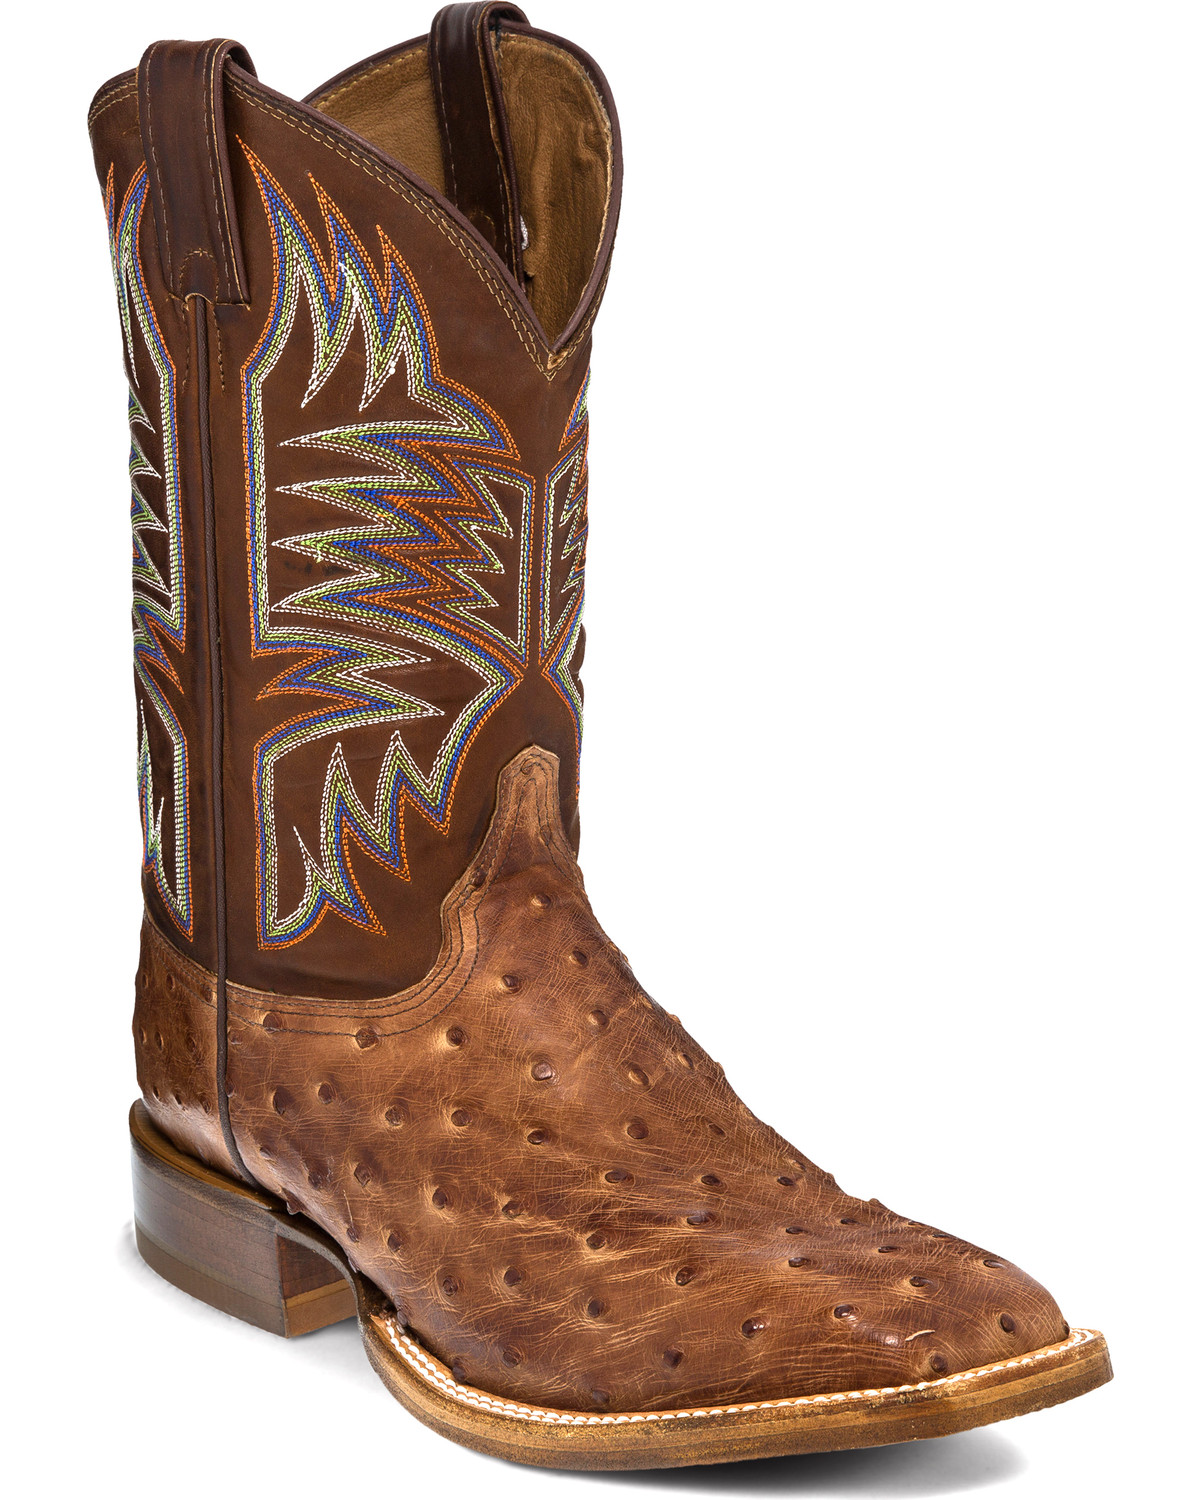 Cowboy Boots For Men Square Toe Hot Sale, 59% OFF 